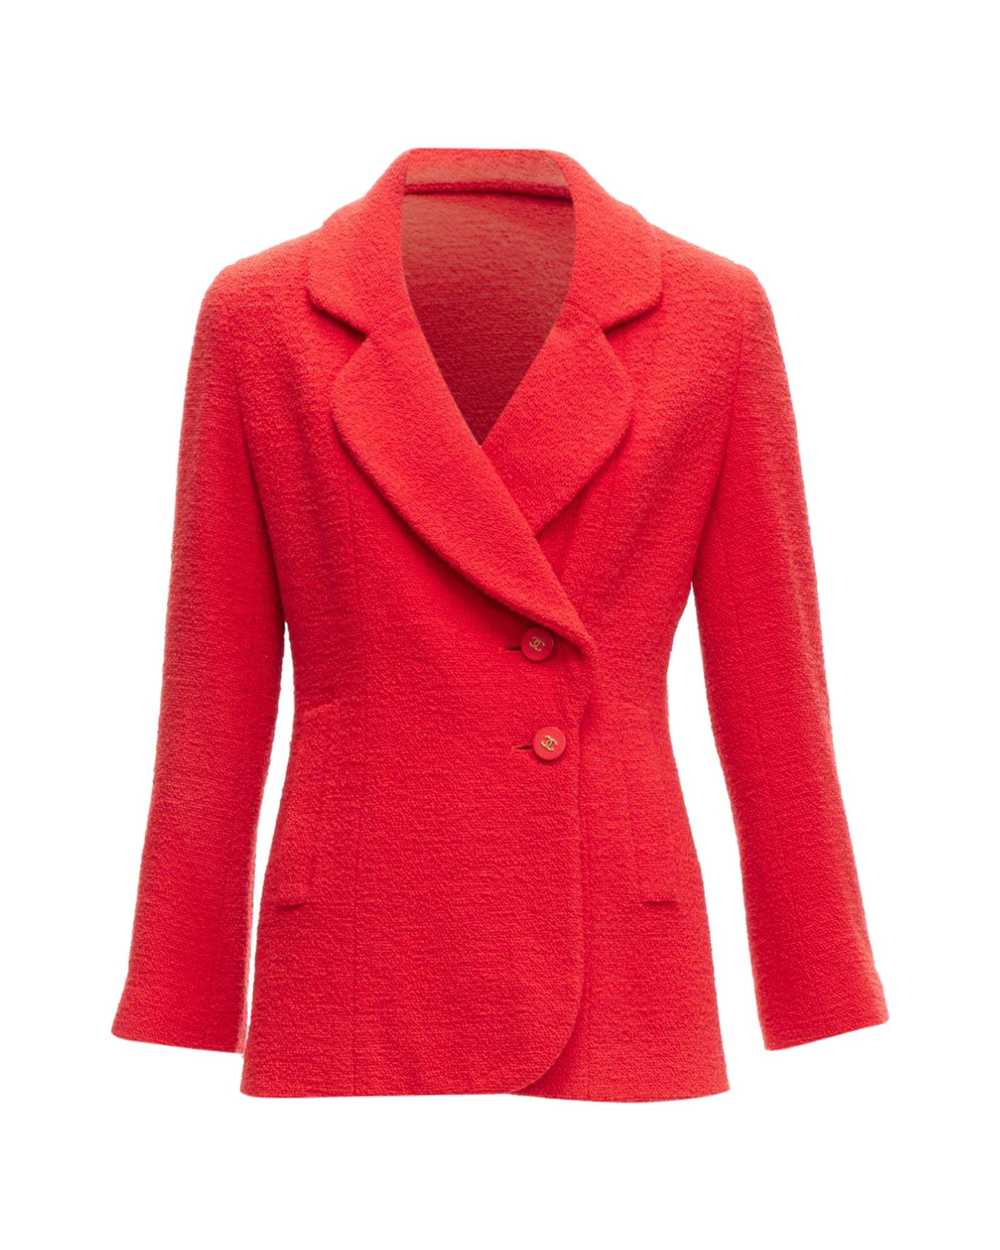 Product Details Chanel Vintage Red Tweed Blazer - image 1